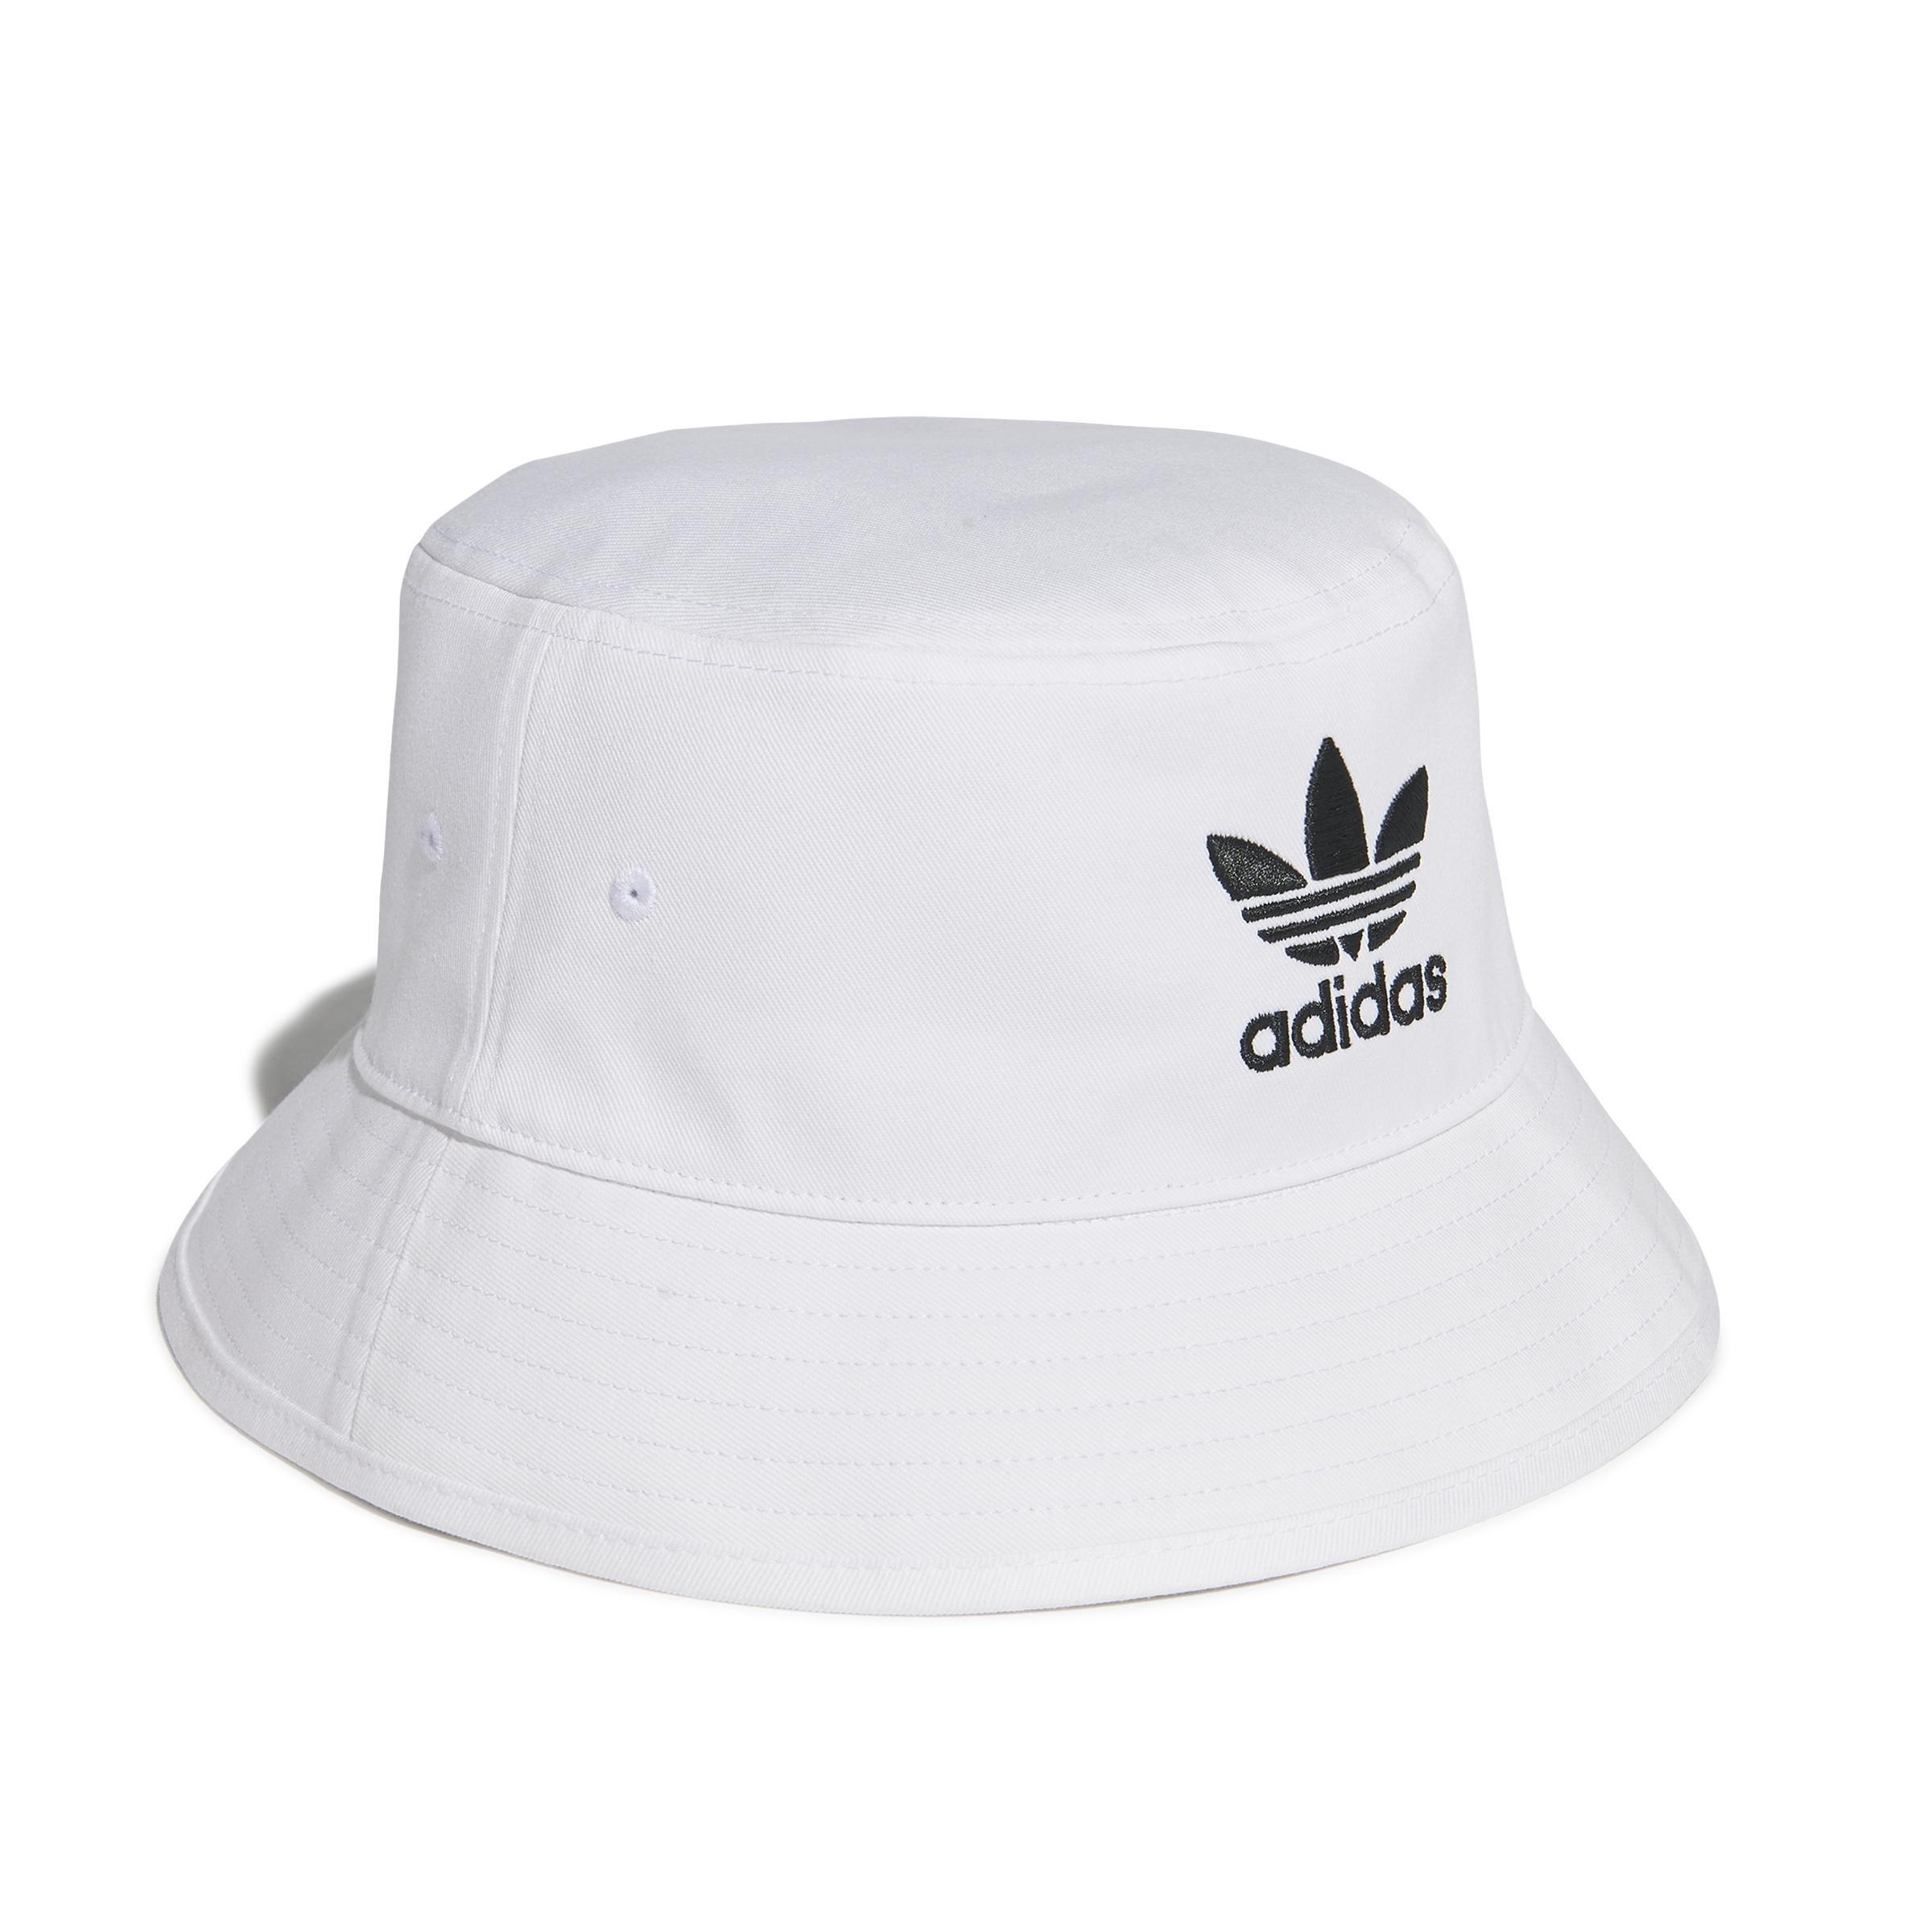 adidas - Unisex Trefoil Bucket Hat, White